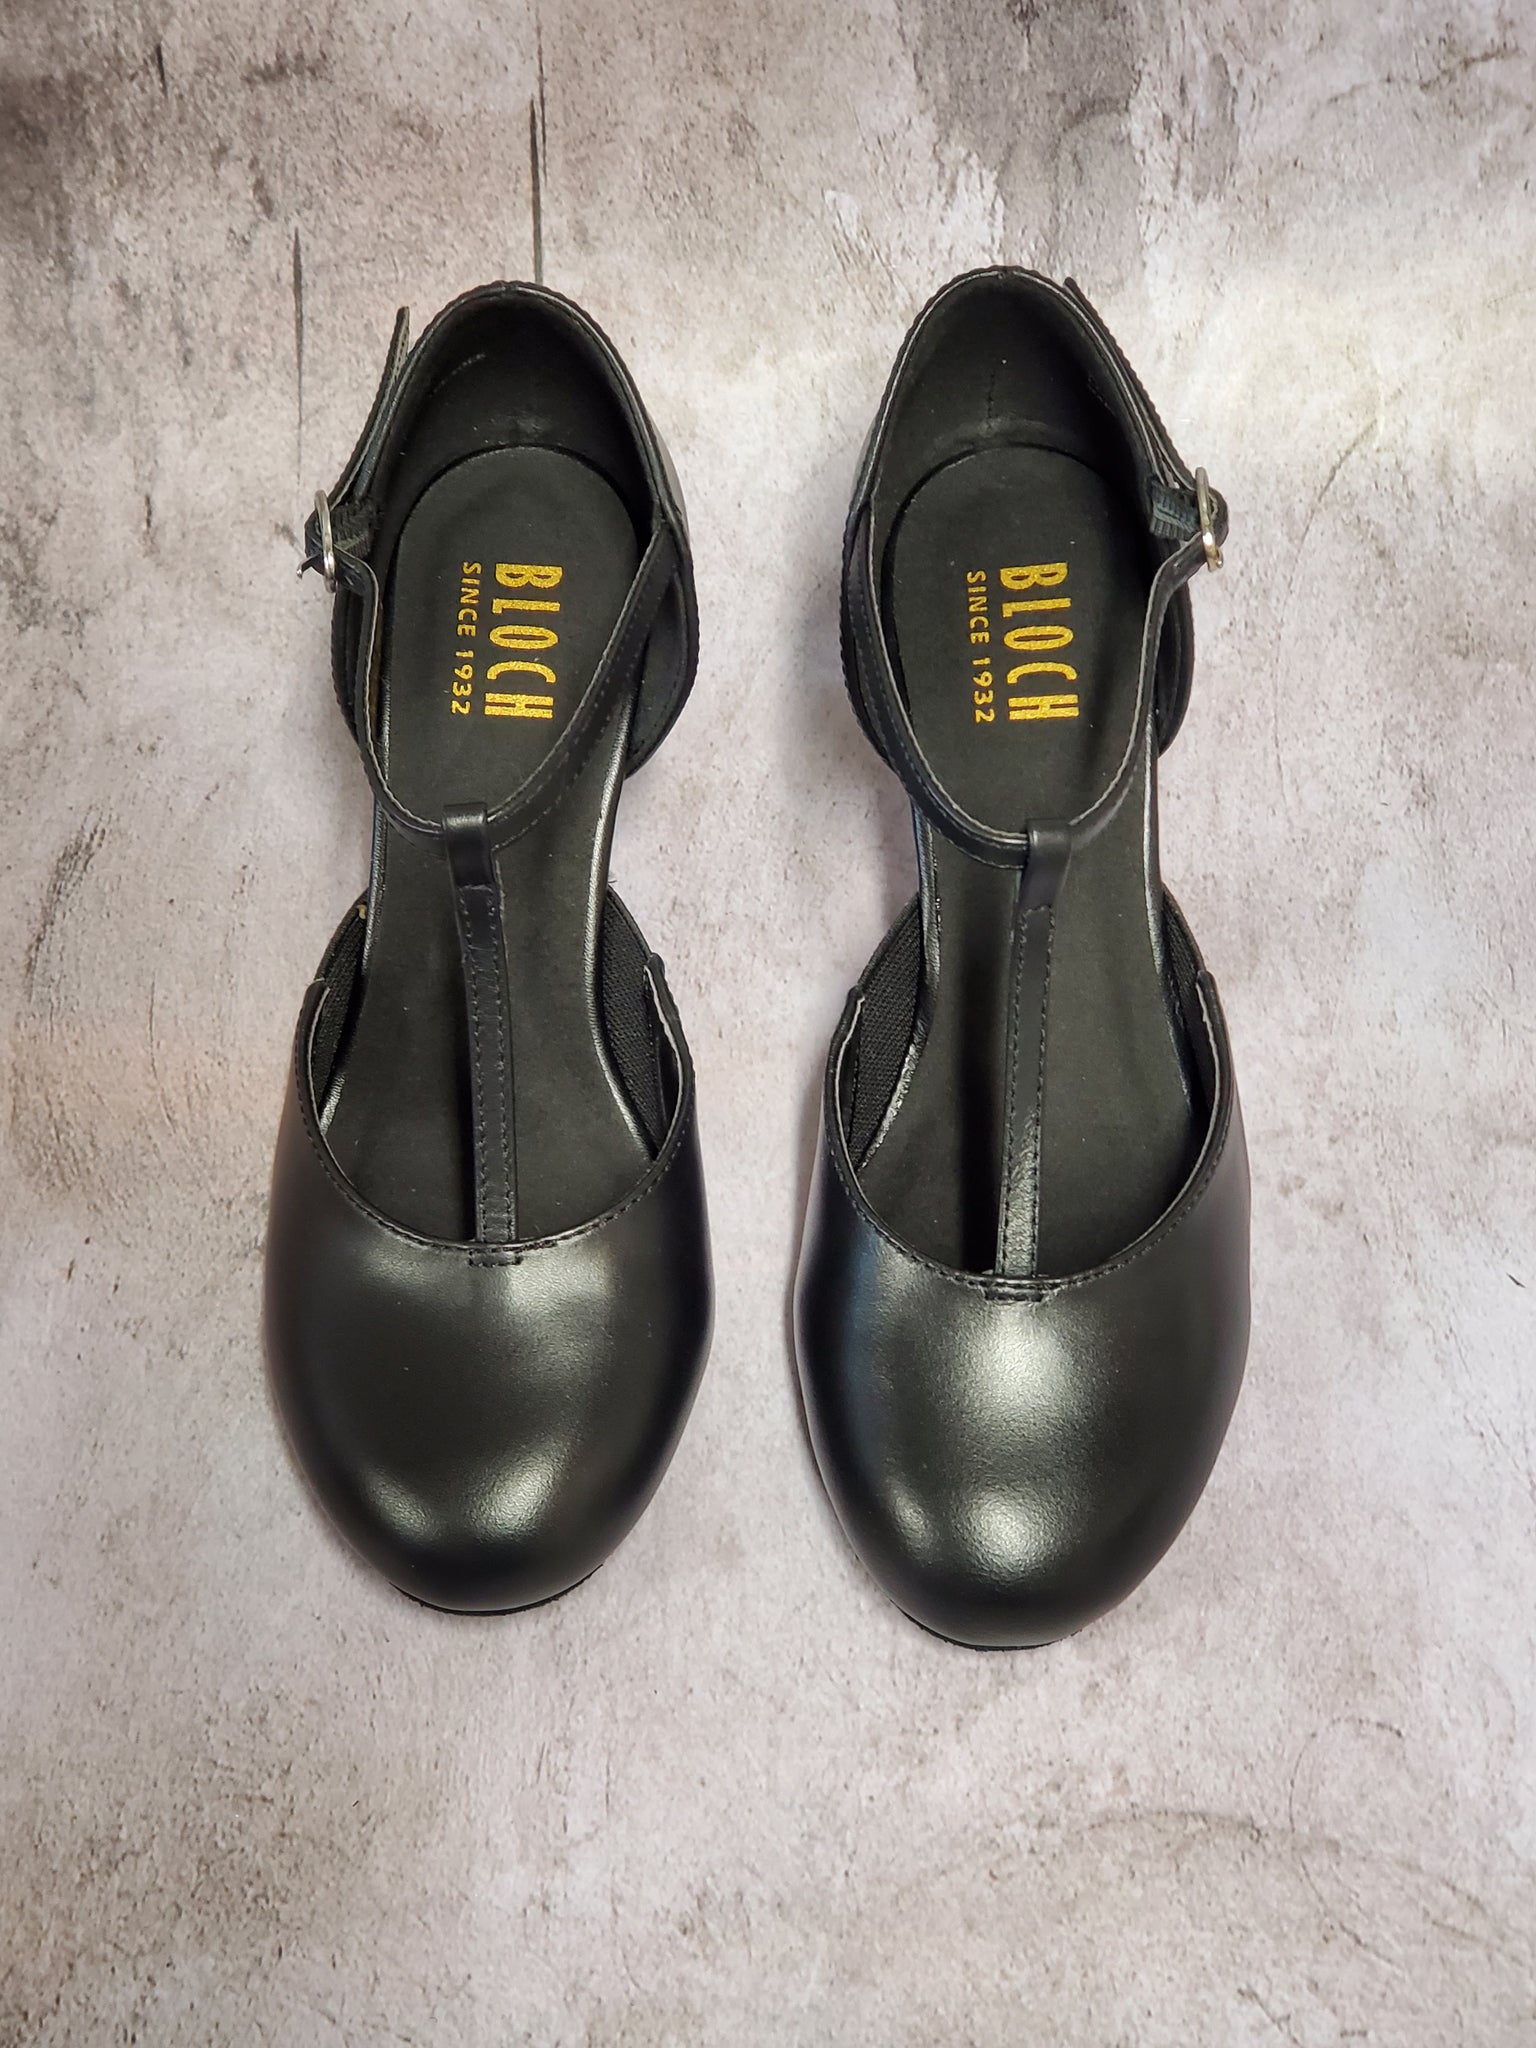 Bloch Splitflex Character Shoes - Black